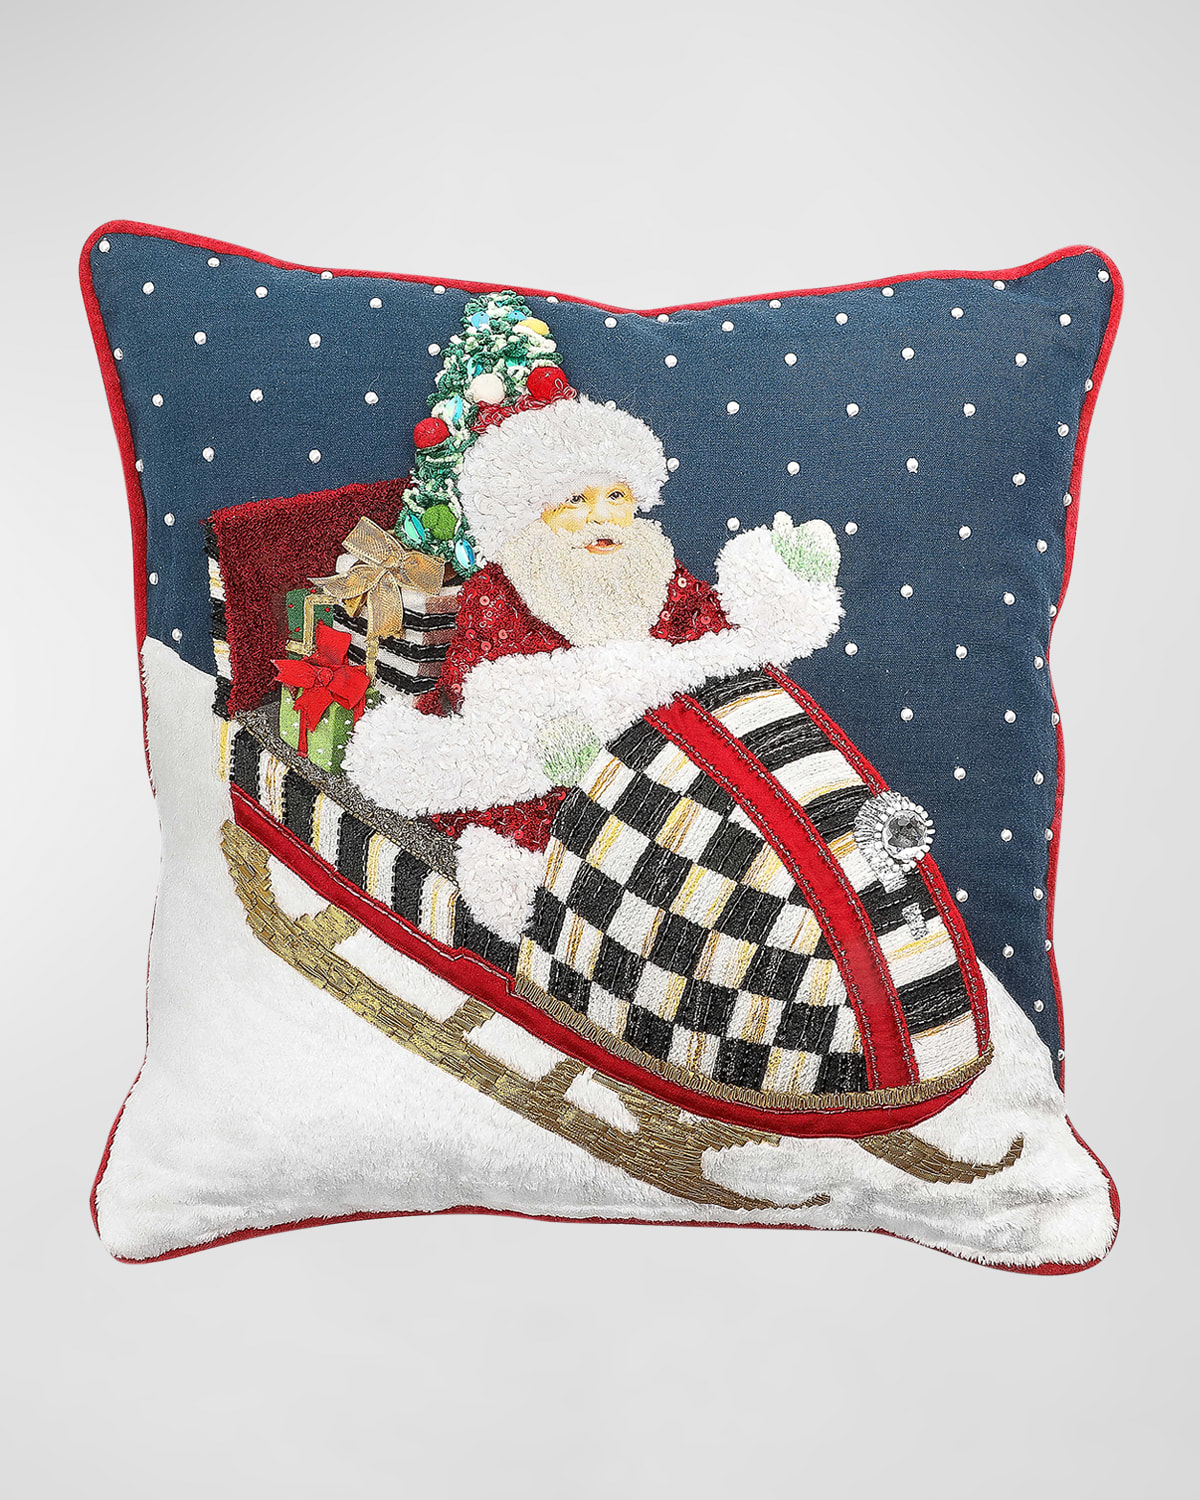 Mackenzie-childs Santa Snowmobile Pillow, 18" Square